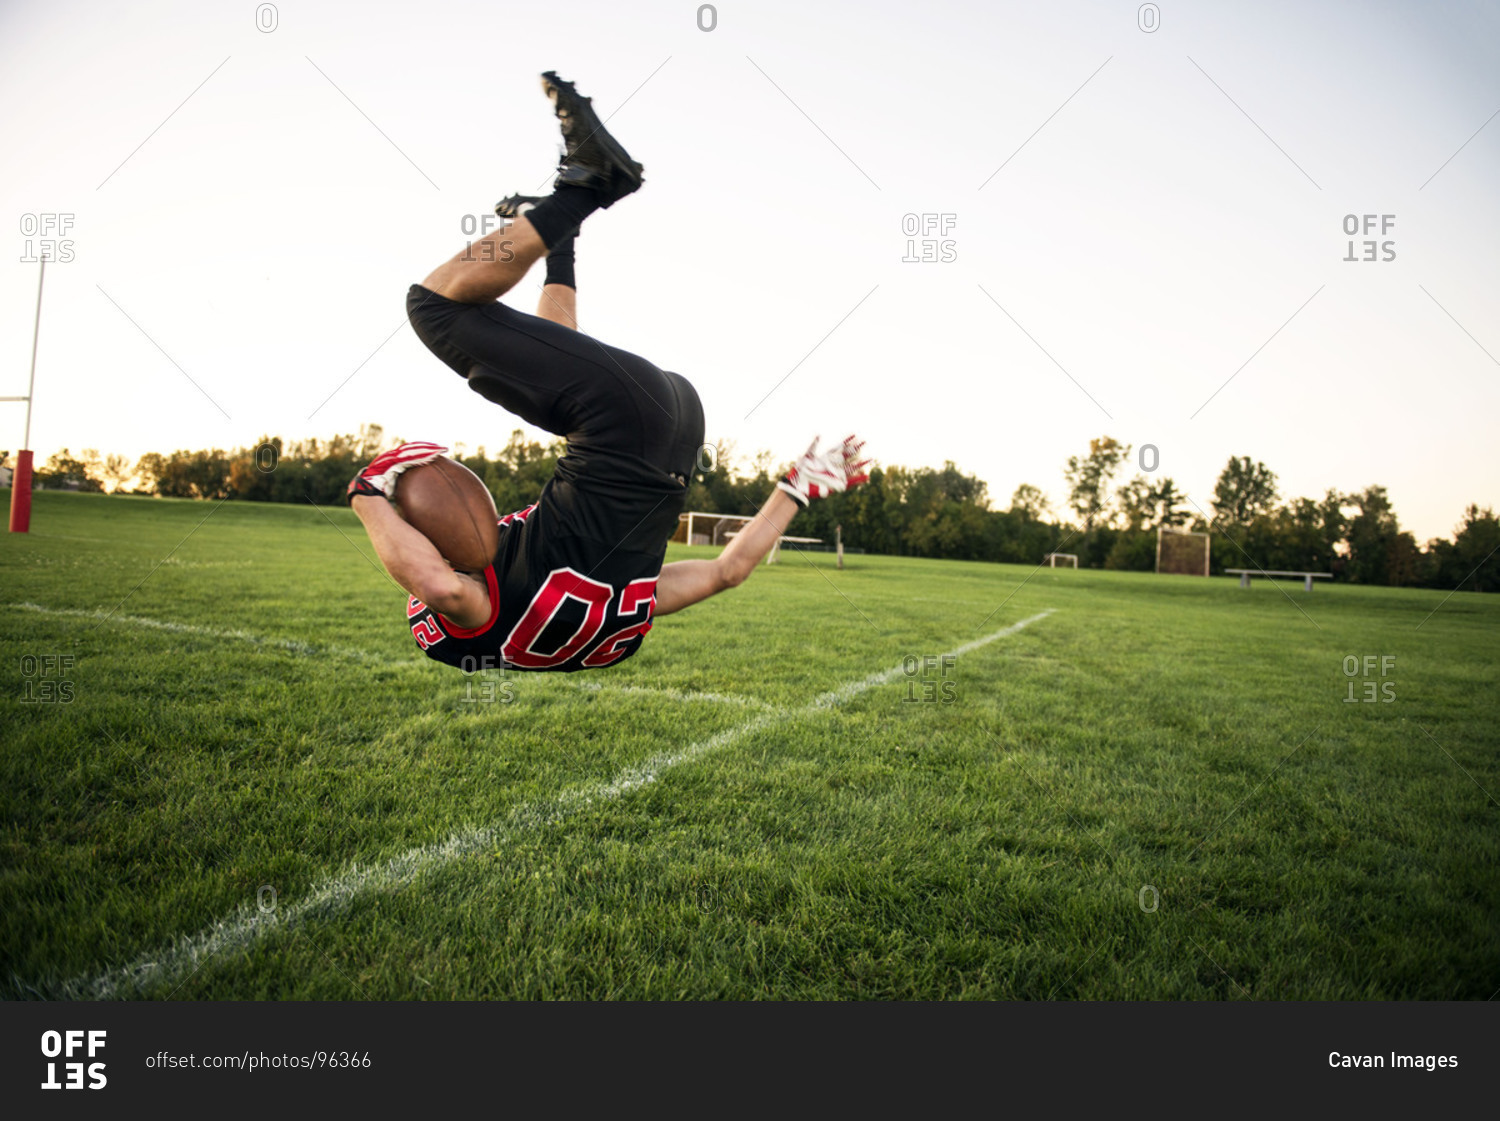 Football player doing a back flip